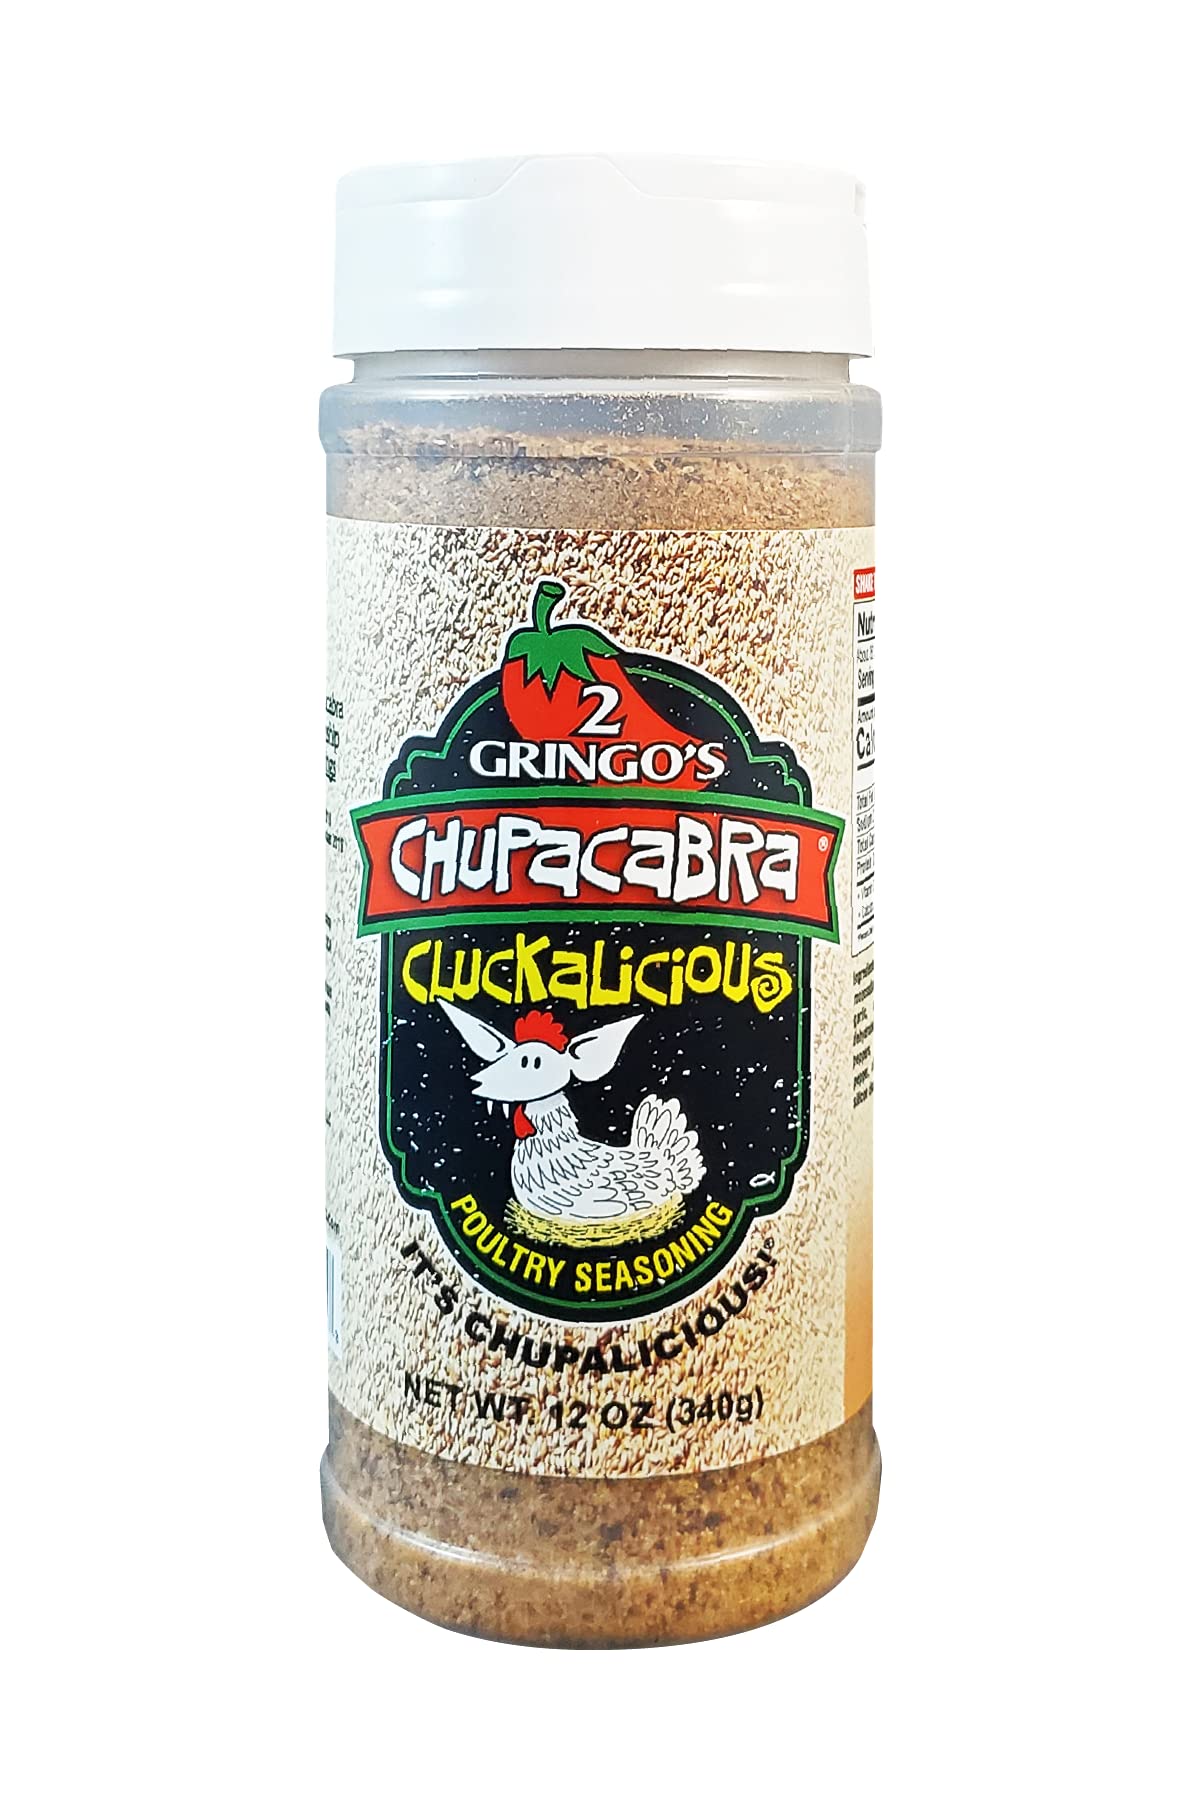 2 Gringo's Chupacabra Cluckalicious Poultry Seasoning 7 oz